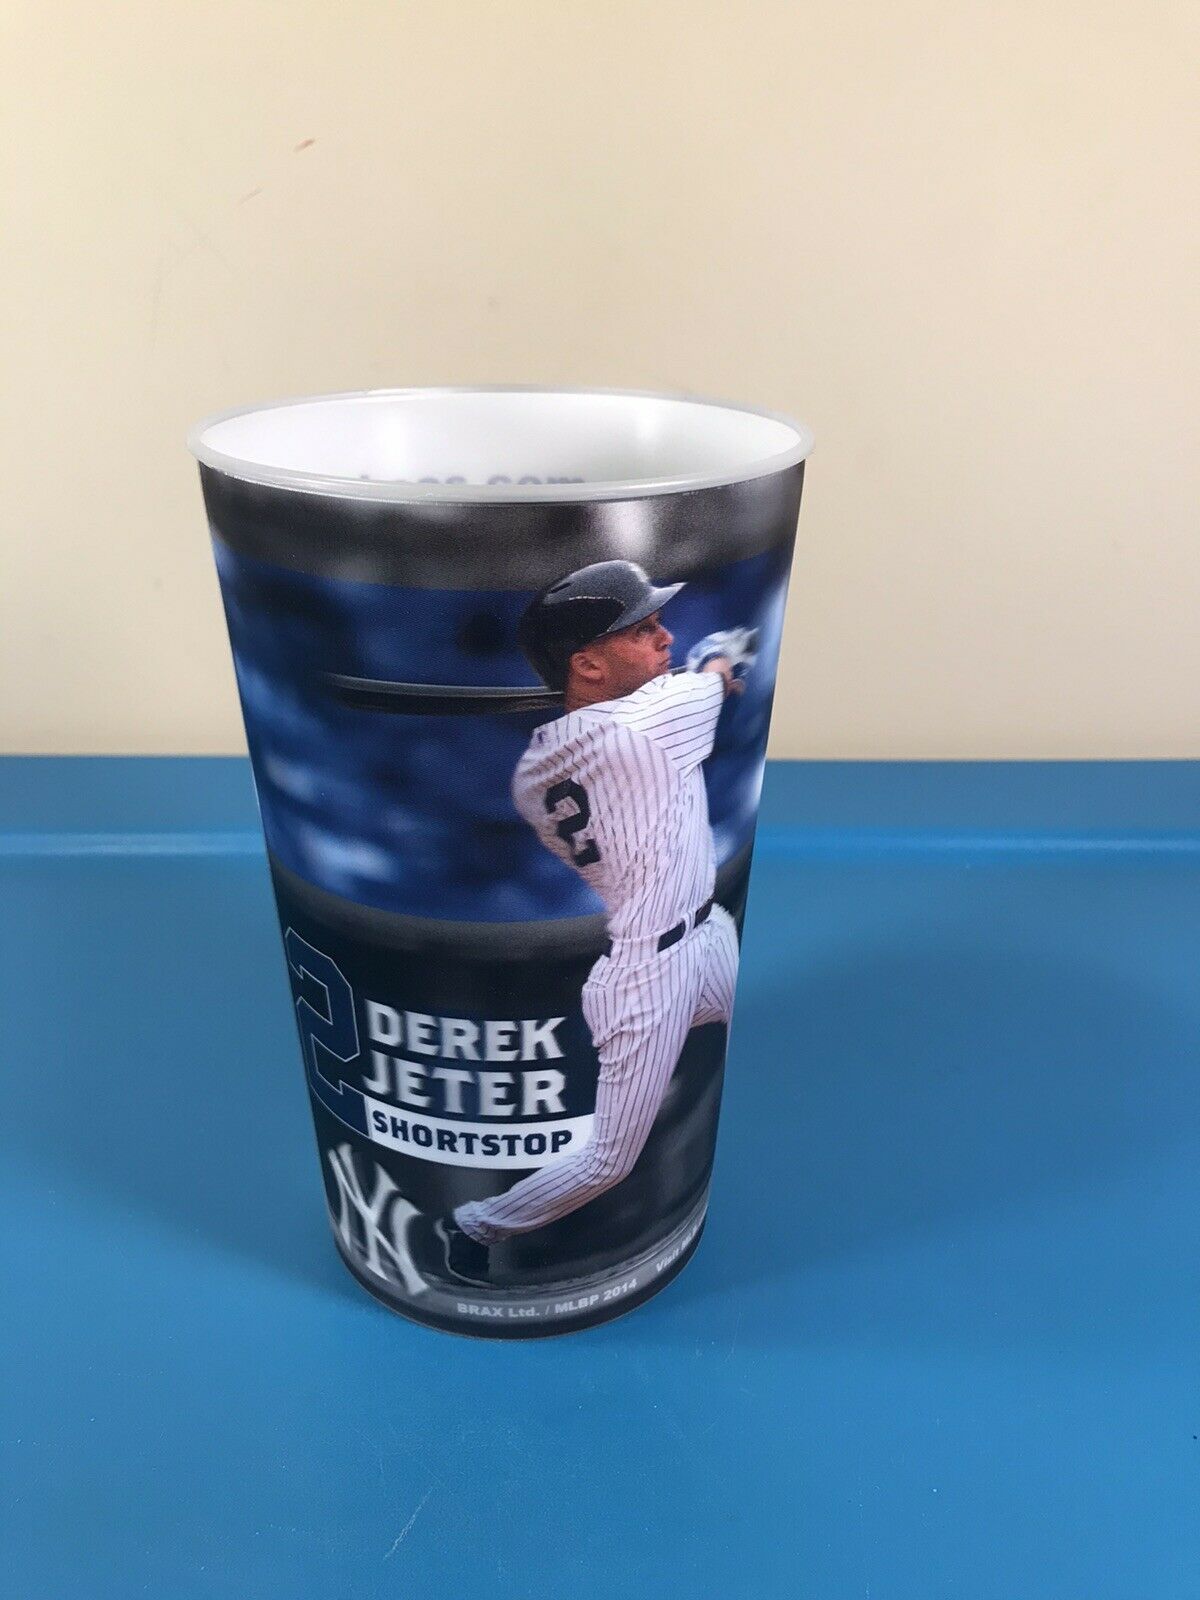 Derek Jeter 32oz Yankees Stadium Hologram cup Shortstop 2015 Souvenir Cup 3D